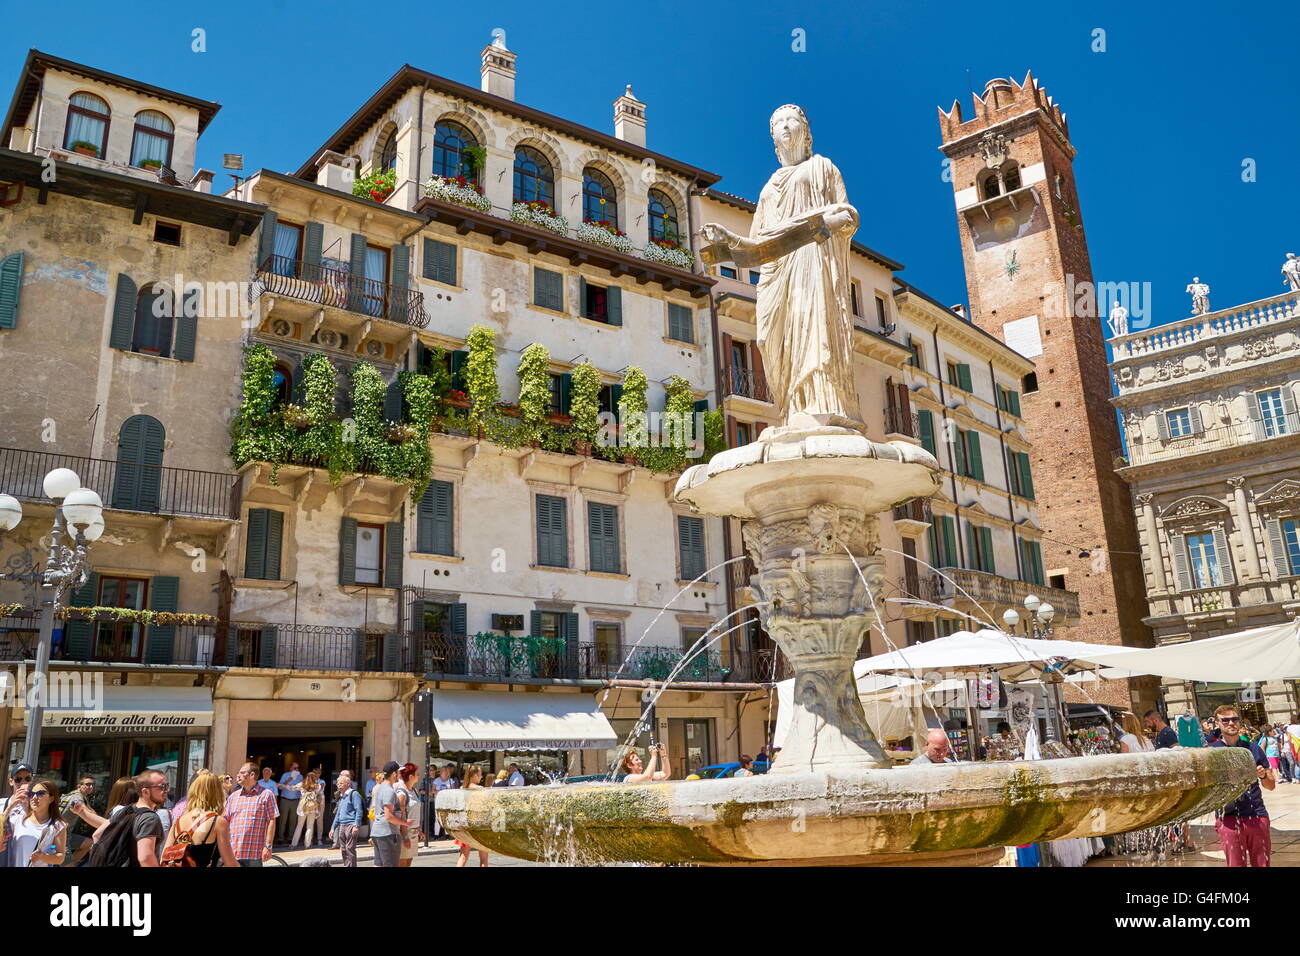 Brunnen auf der Piazza Delle Erbe, Altstadt von Verona, Venetien, Italien Stockfoto